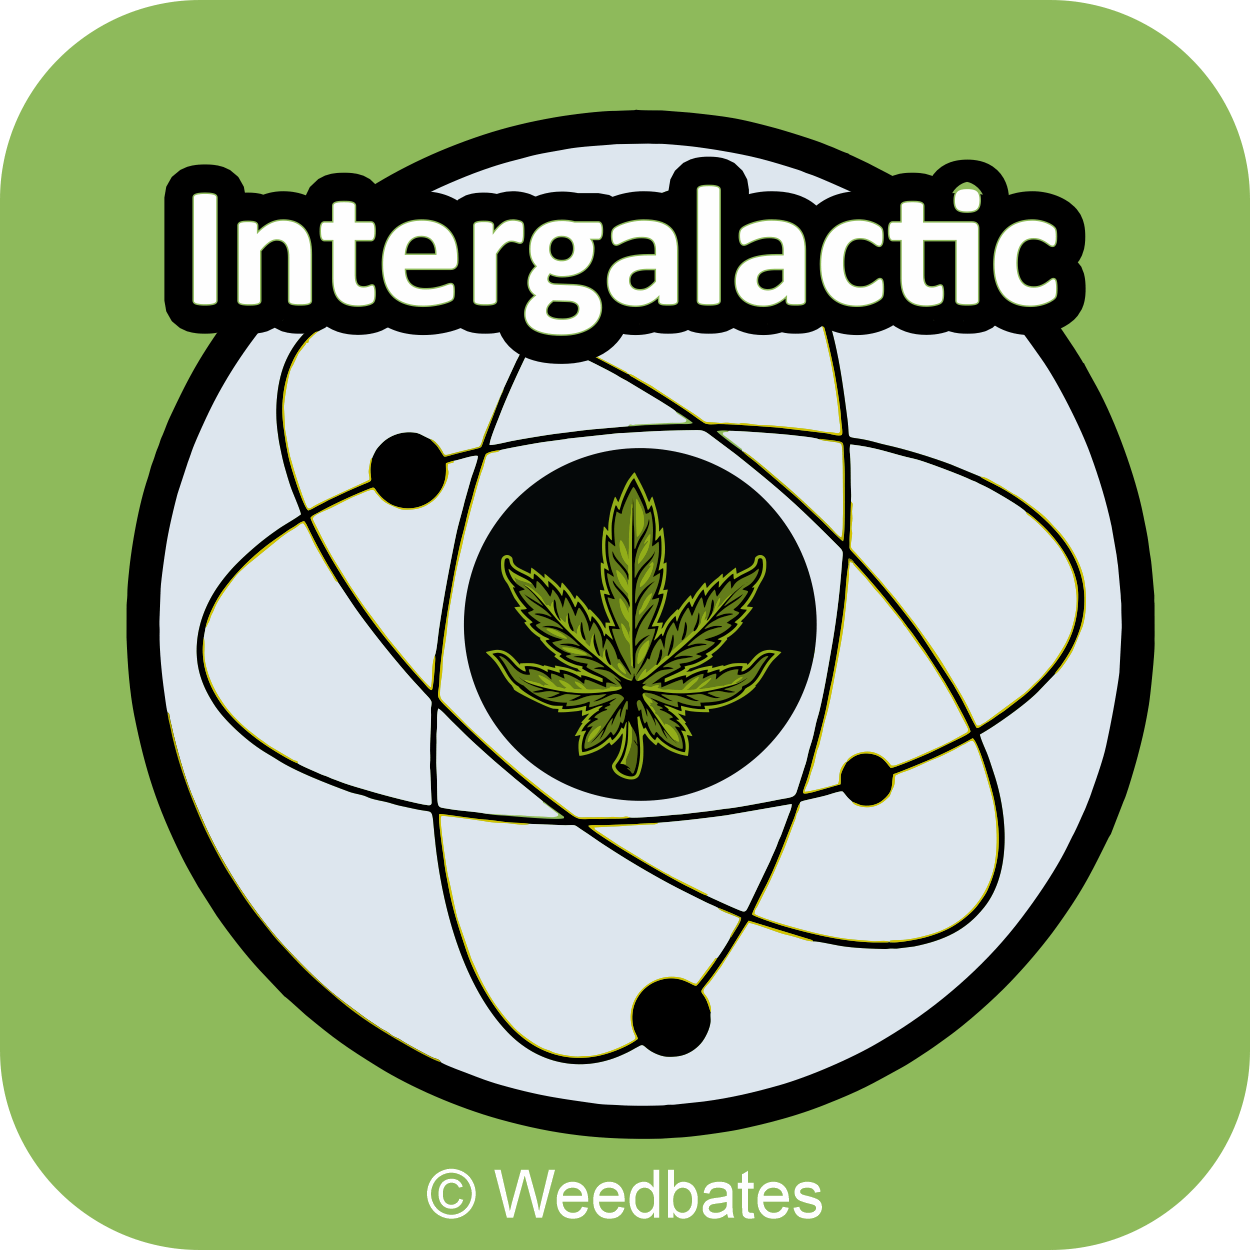 Intergalactic cannabis strain